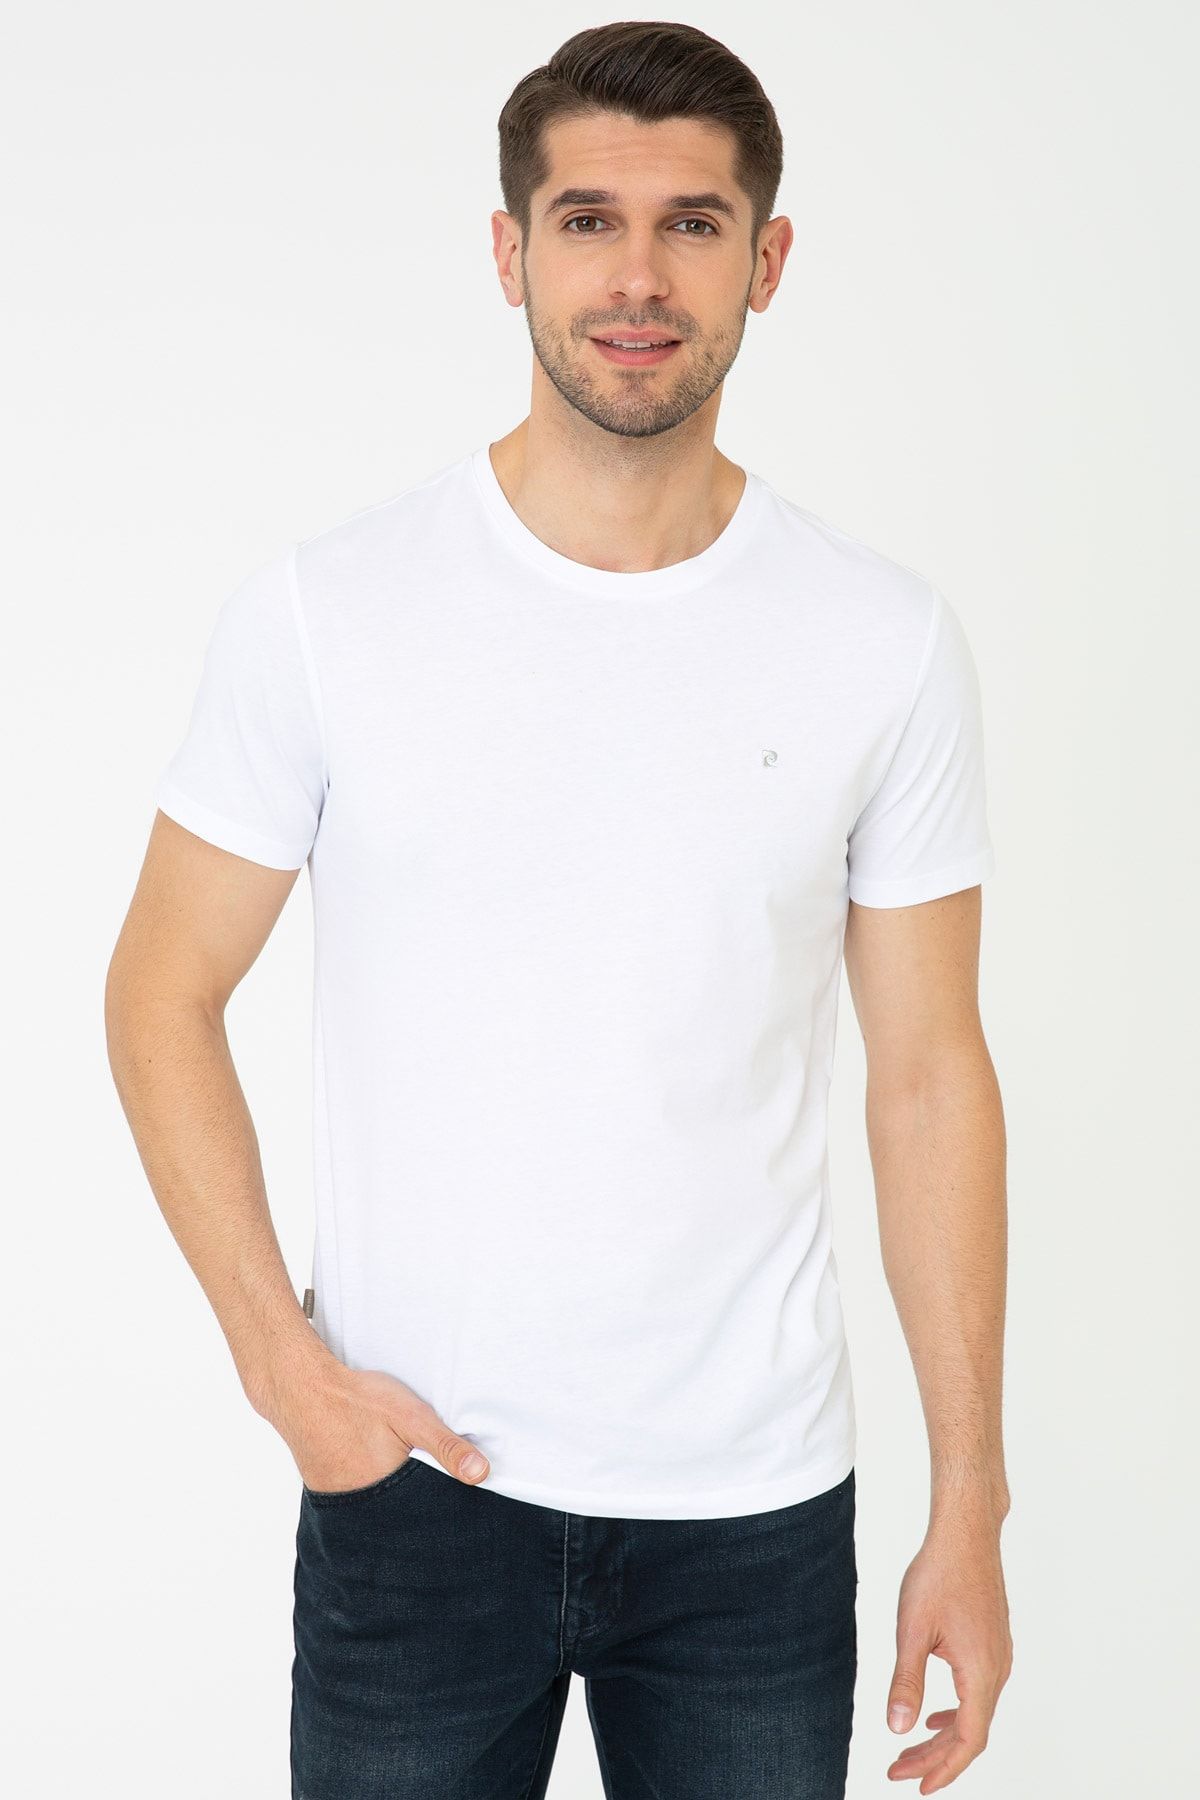 Pierre Cardin Erkek Beyaz T-Shirt G021Gl011.000.1431715